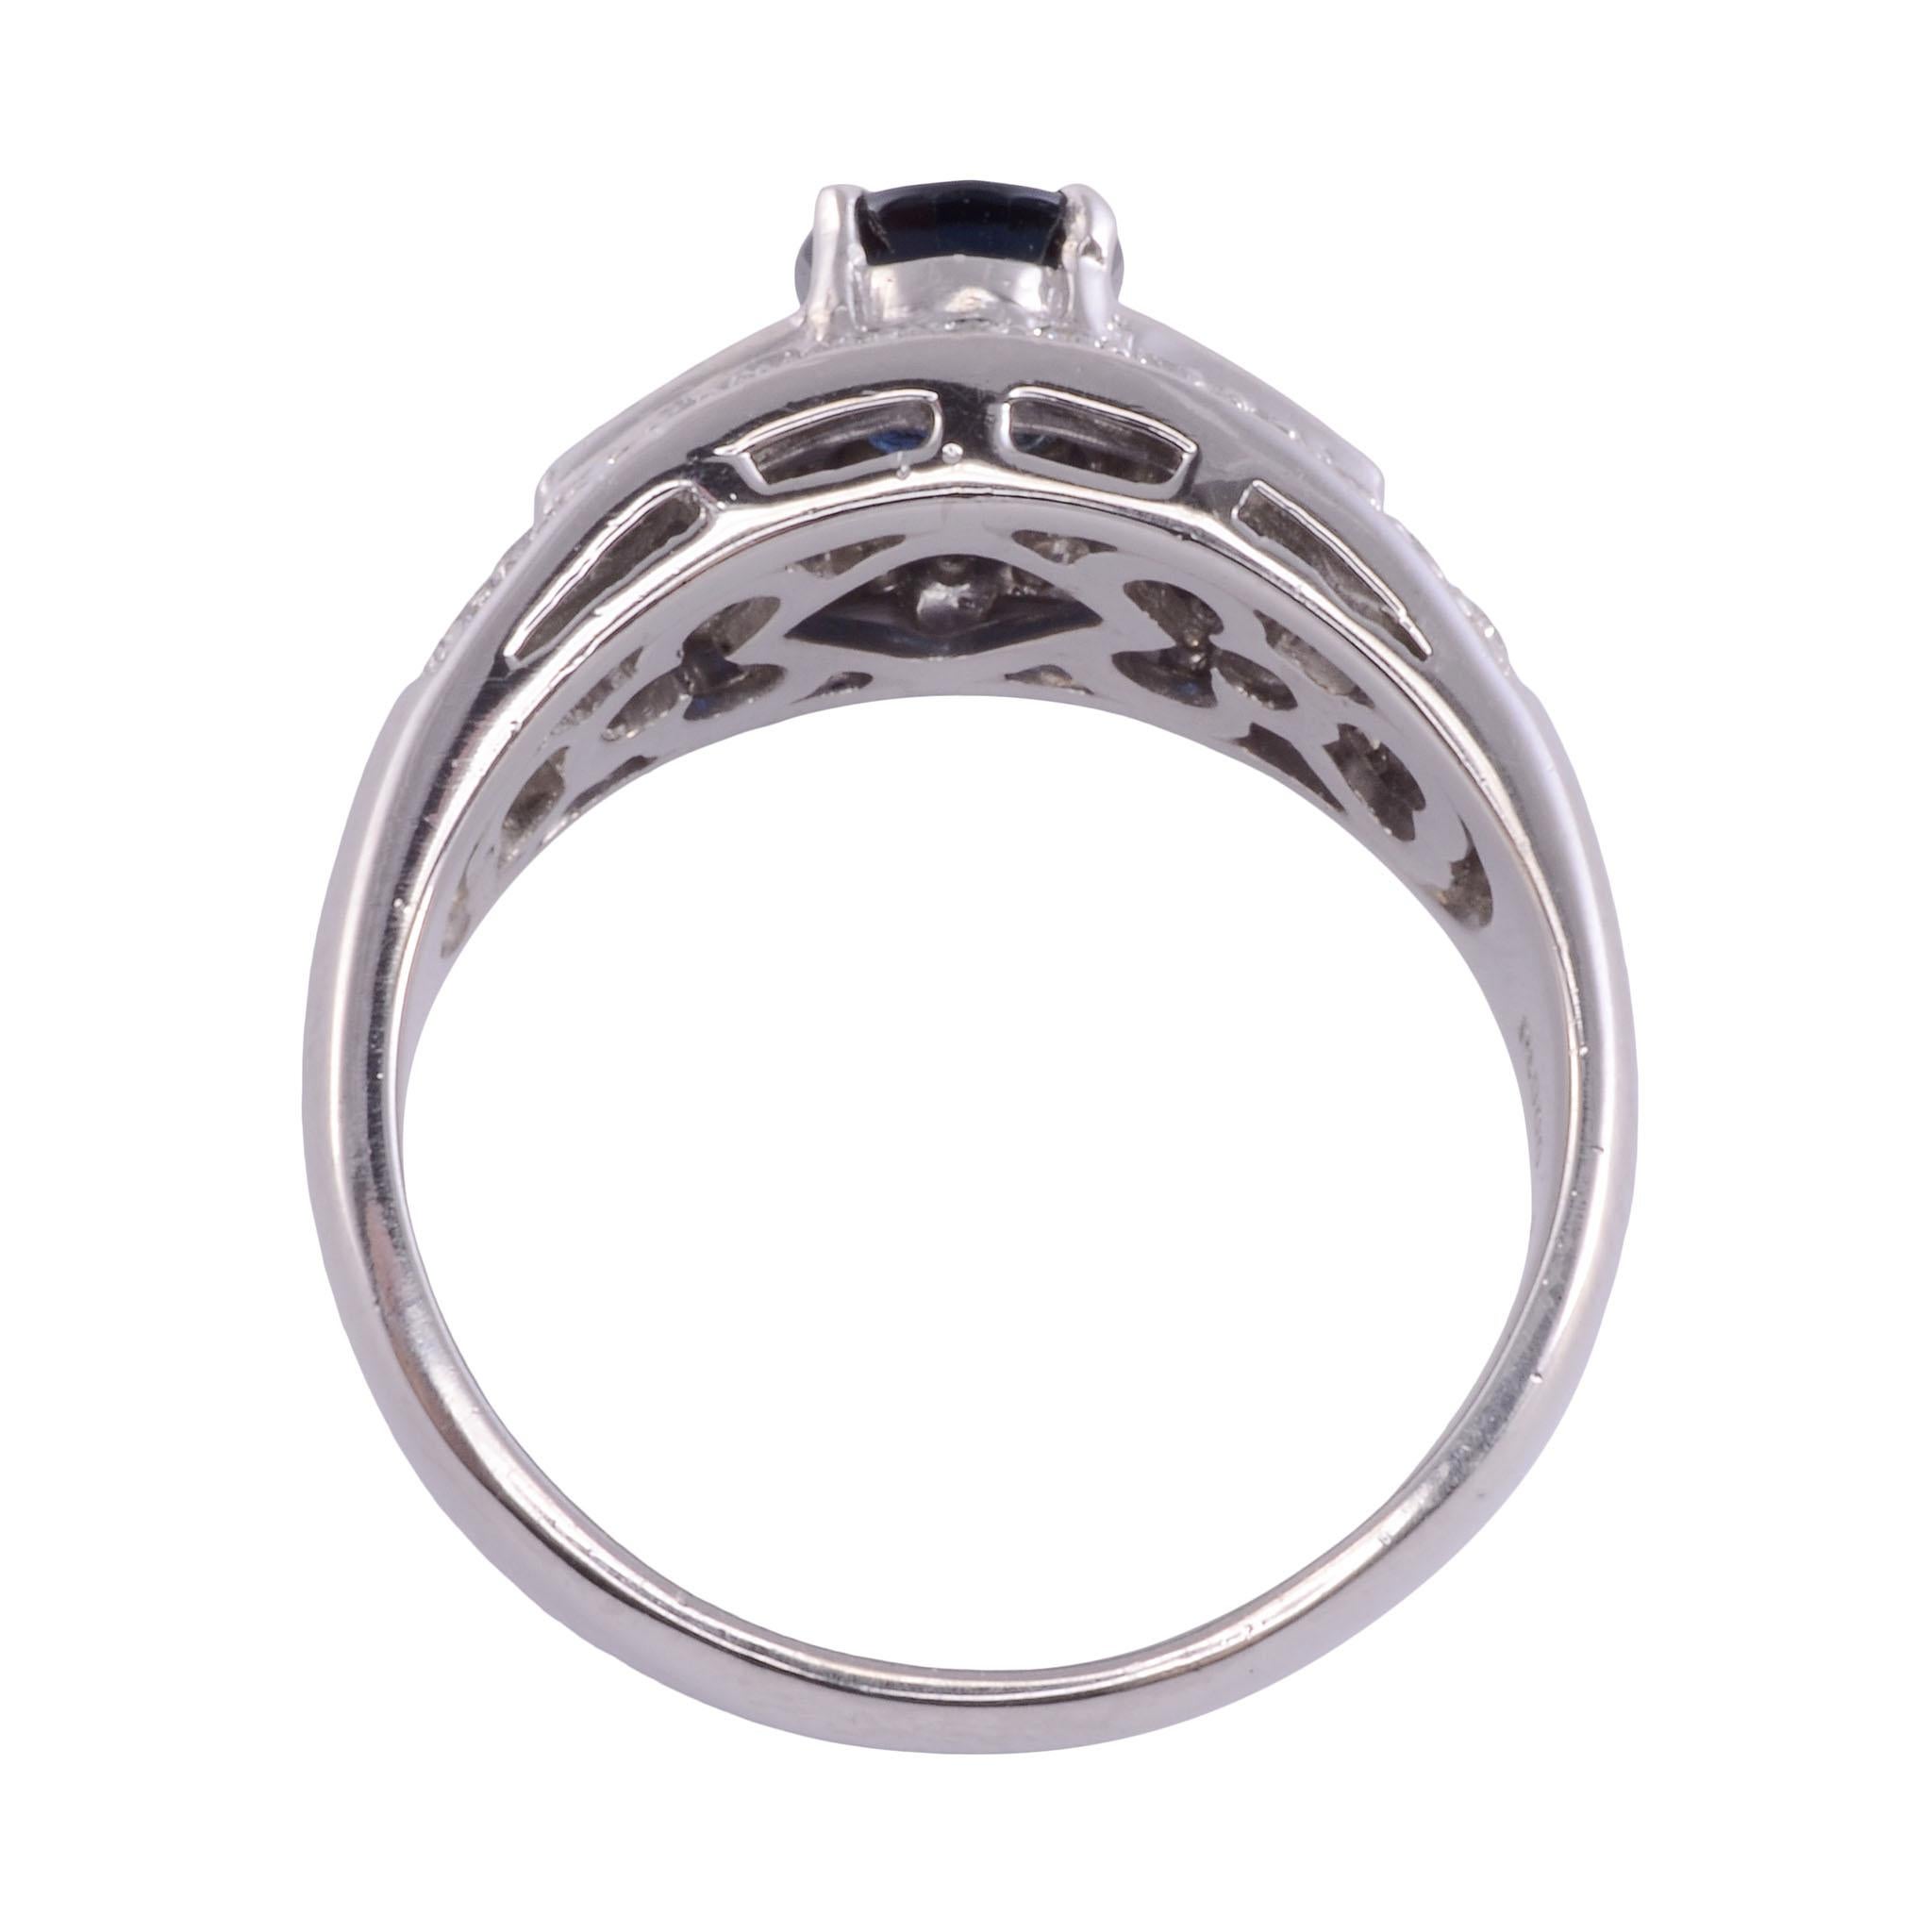 Oval Cut Sapphire Diamond Platinum Ring For Sale